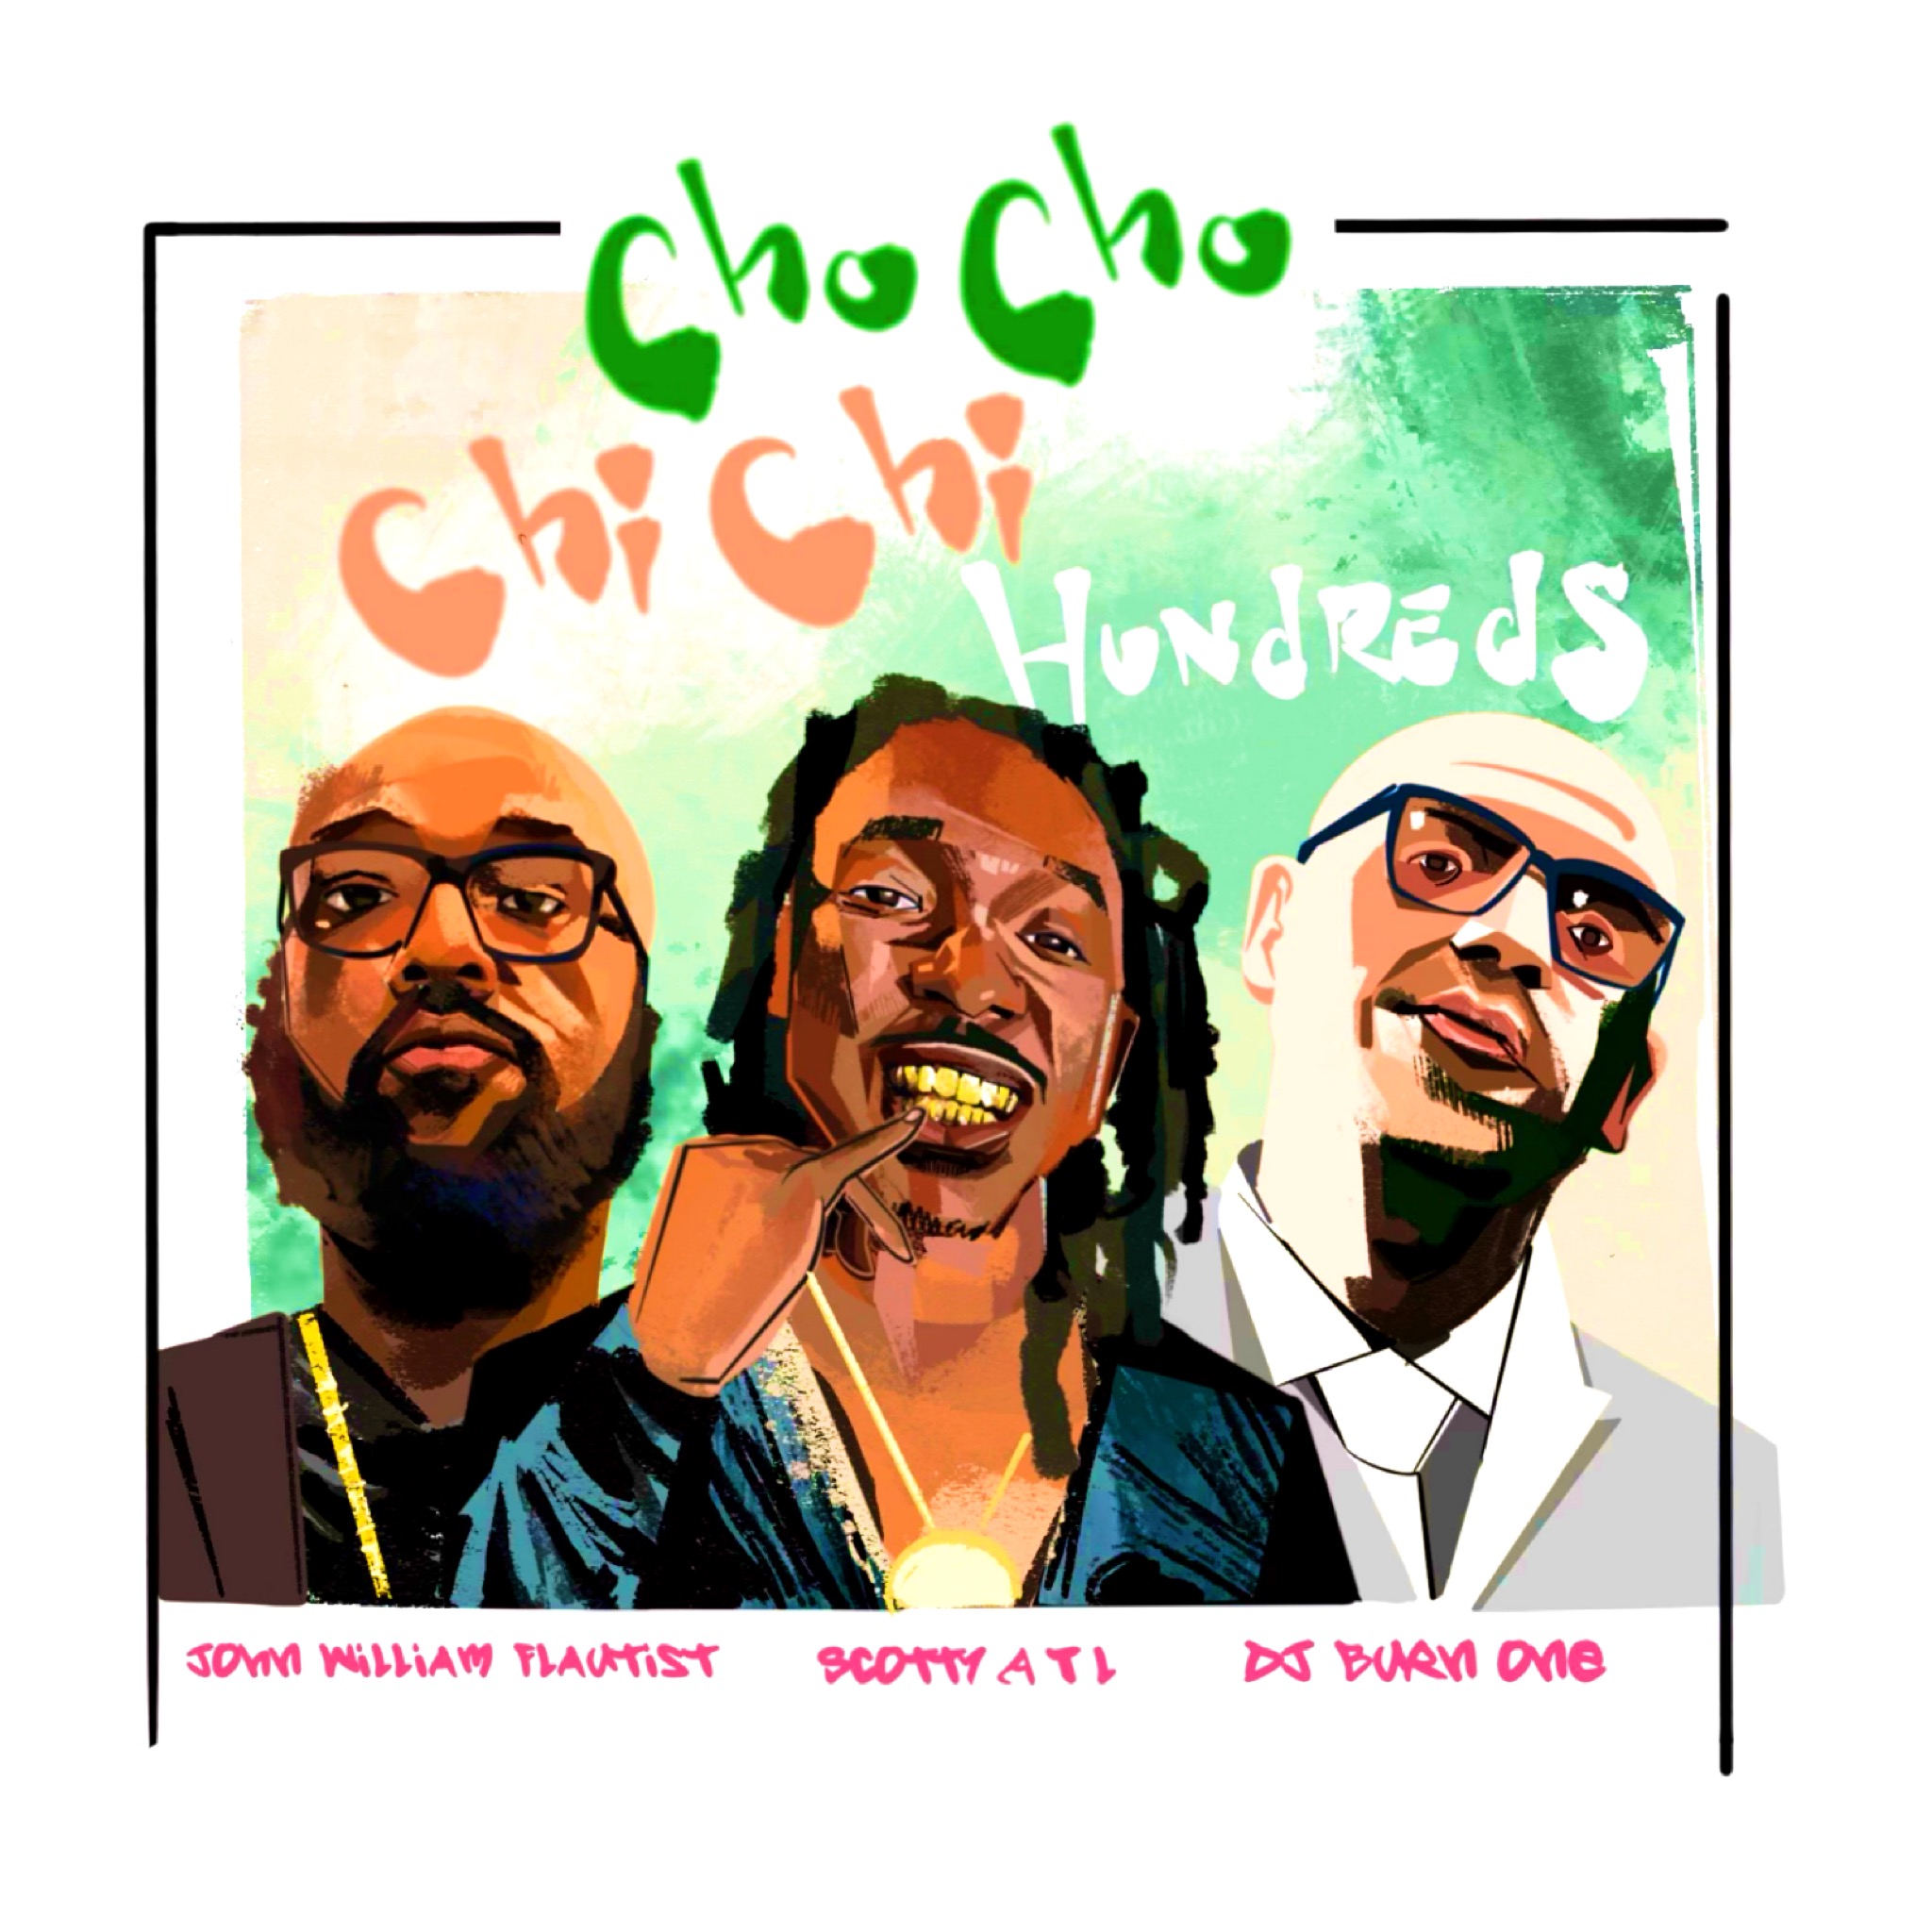 Art for Cho Cho Chi Chi Hundreds Clean by John William Flautist ft. ScottyATL & DJ Burn One